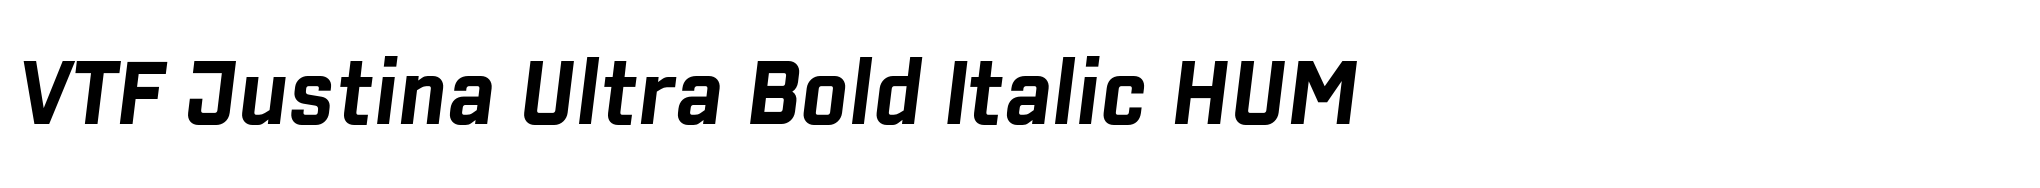 VTF Justina Ultra Bold Italic HUM image